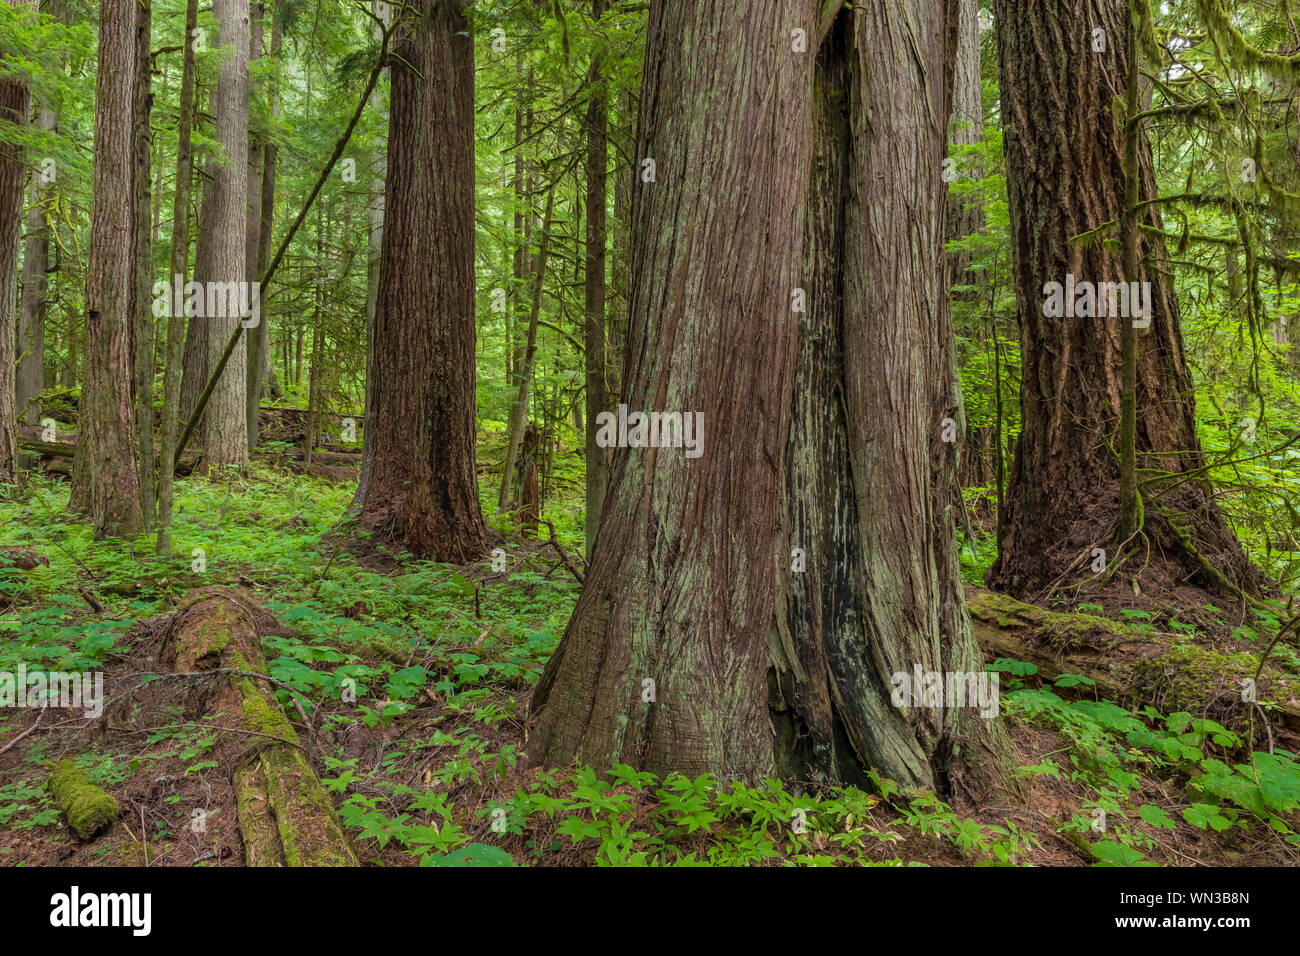 Western Red Cedar, Thuja plicata, and Western Hemlock, Tsuga heterophylla, trees in Federation Forest State Park near Mount Rainier, Washington State, Stock Photo